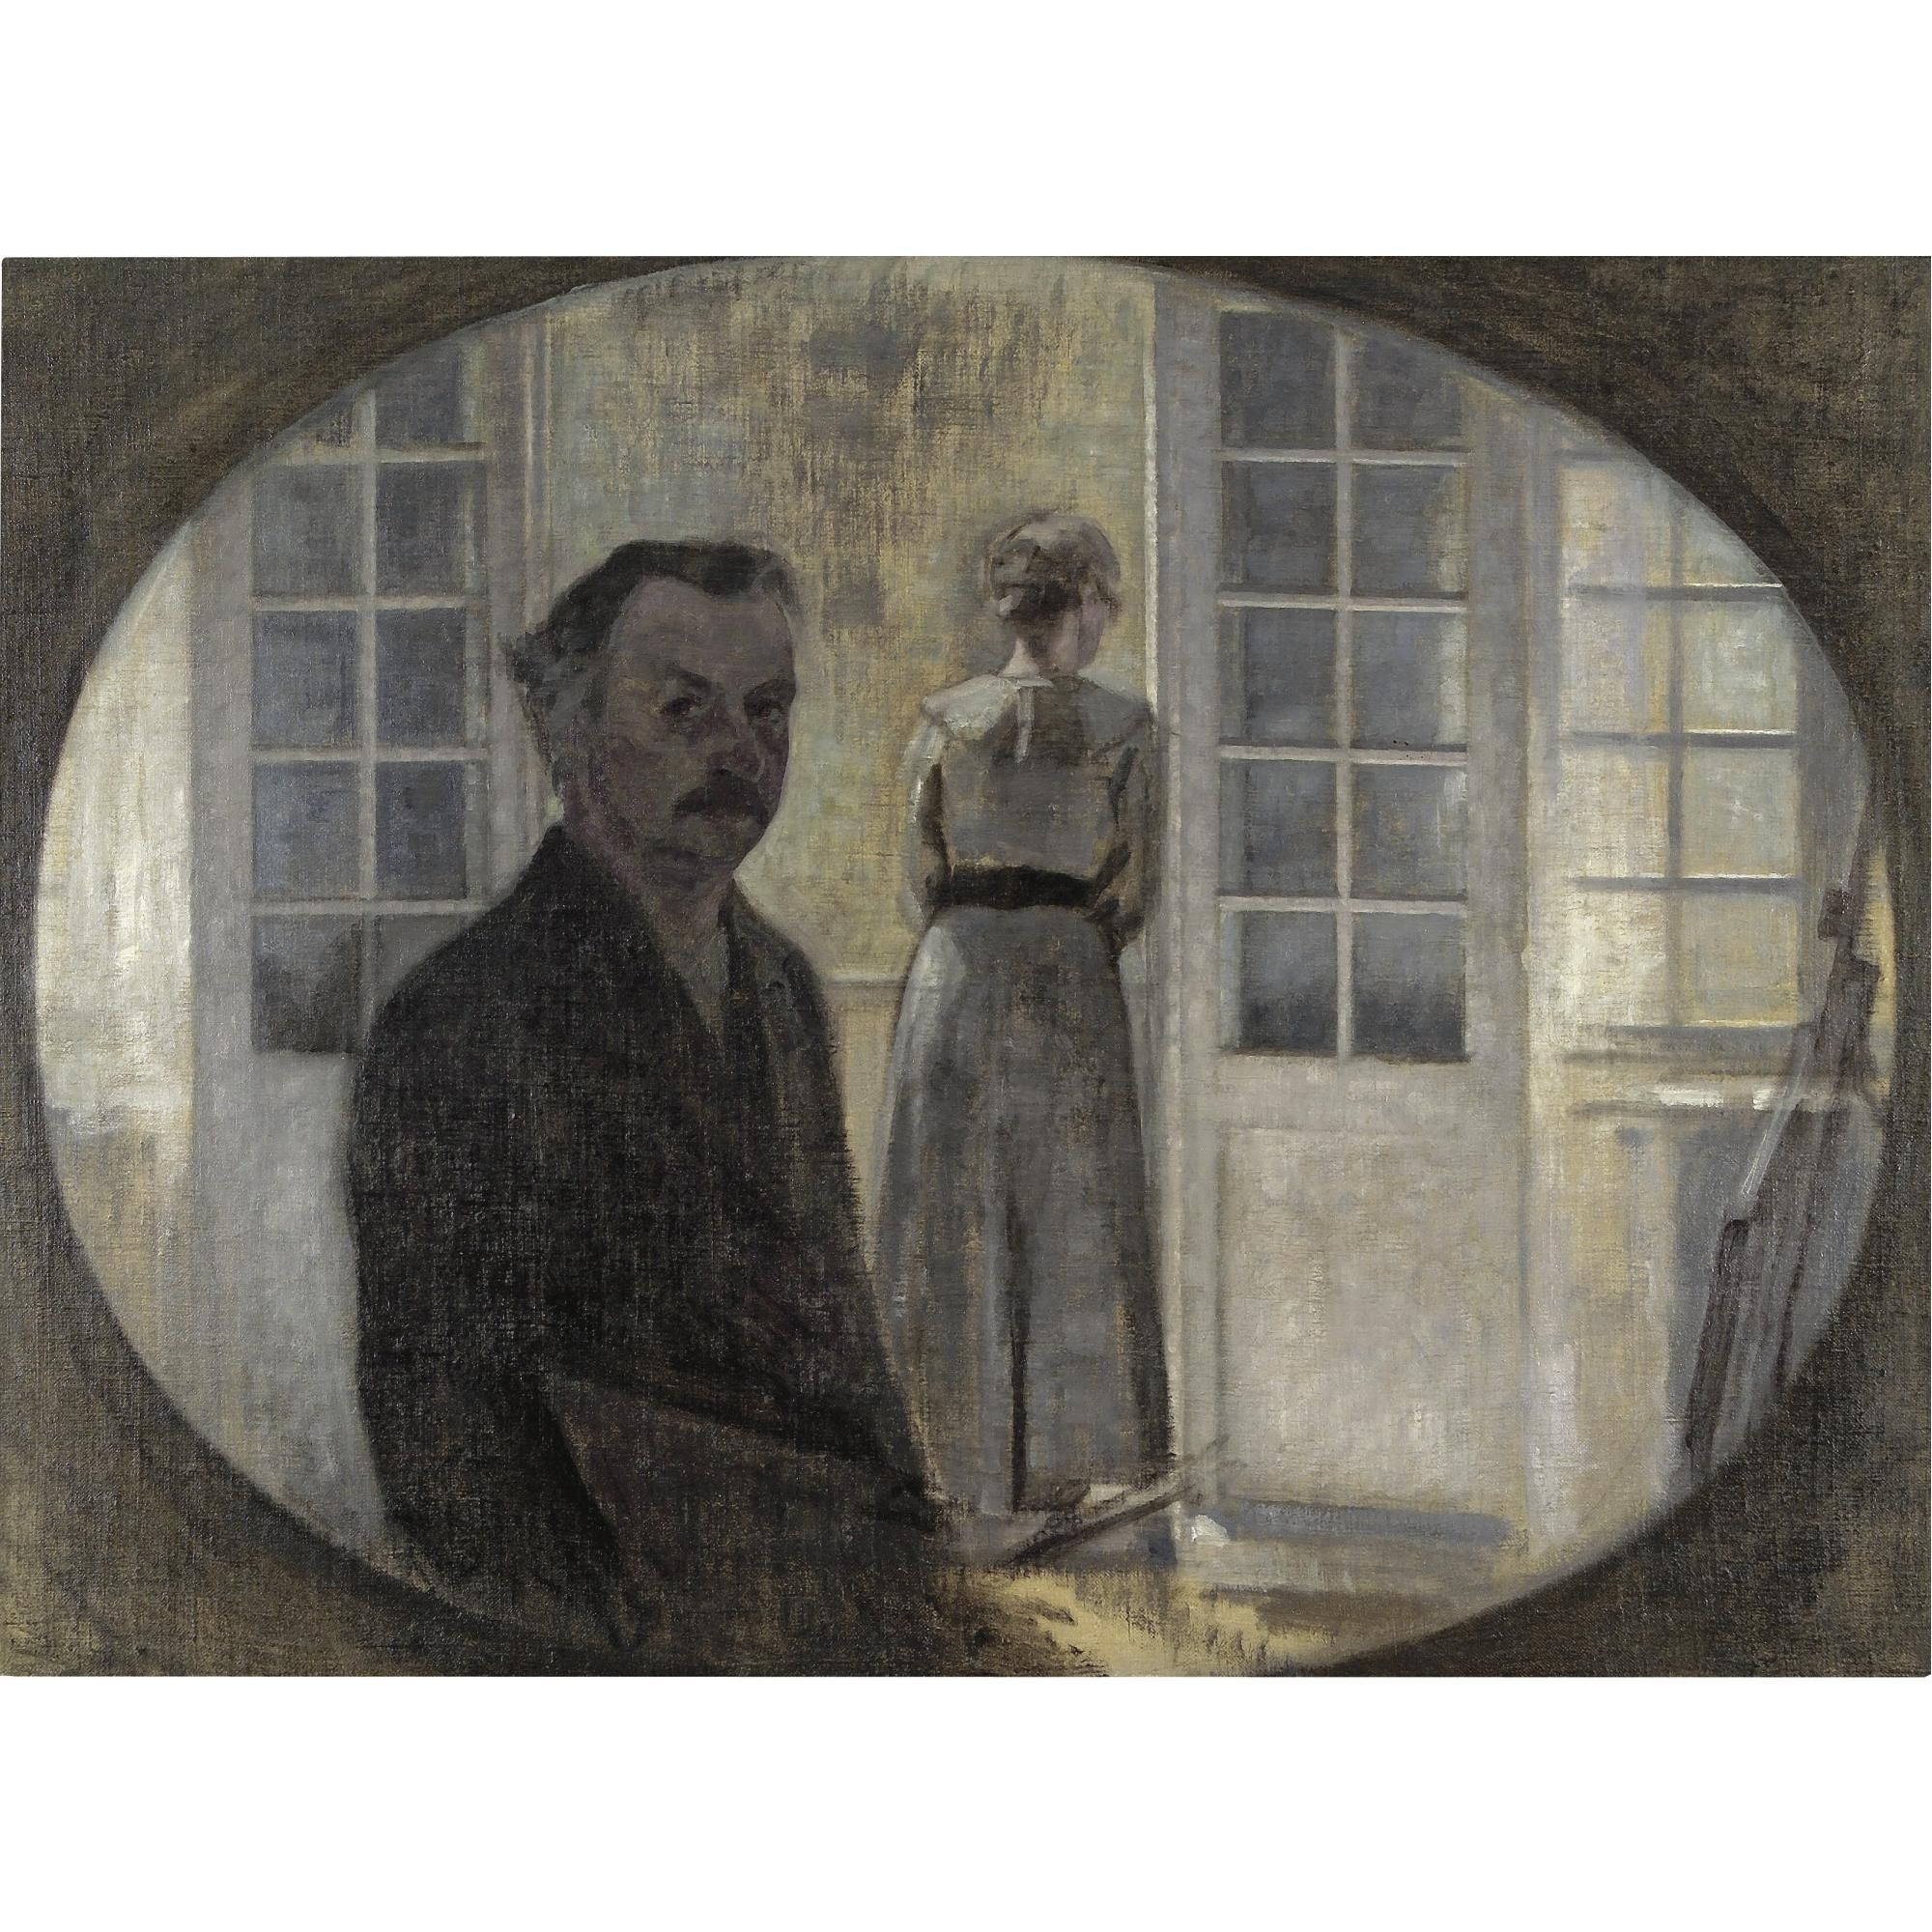 Interiør med kunstneren og hans hustru (Double portrait of the artist and his wife, seen through a mirror) by Vilhelm Hammershøi, FullFormat:,year,1911